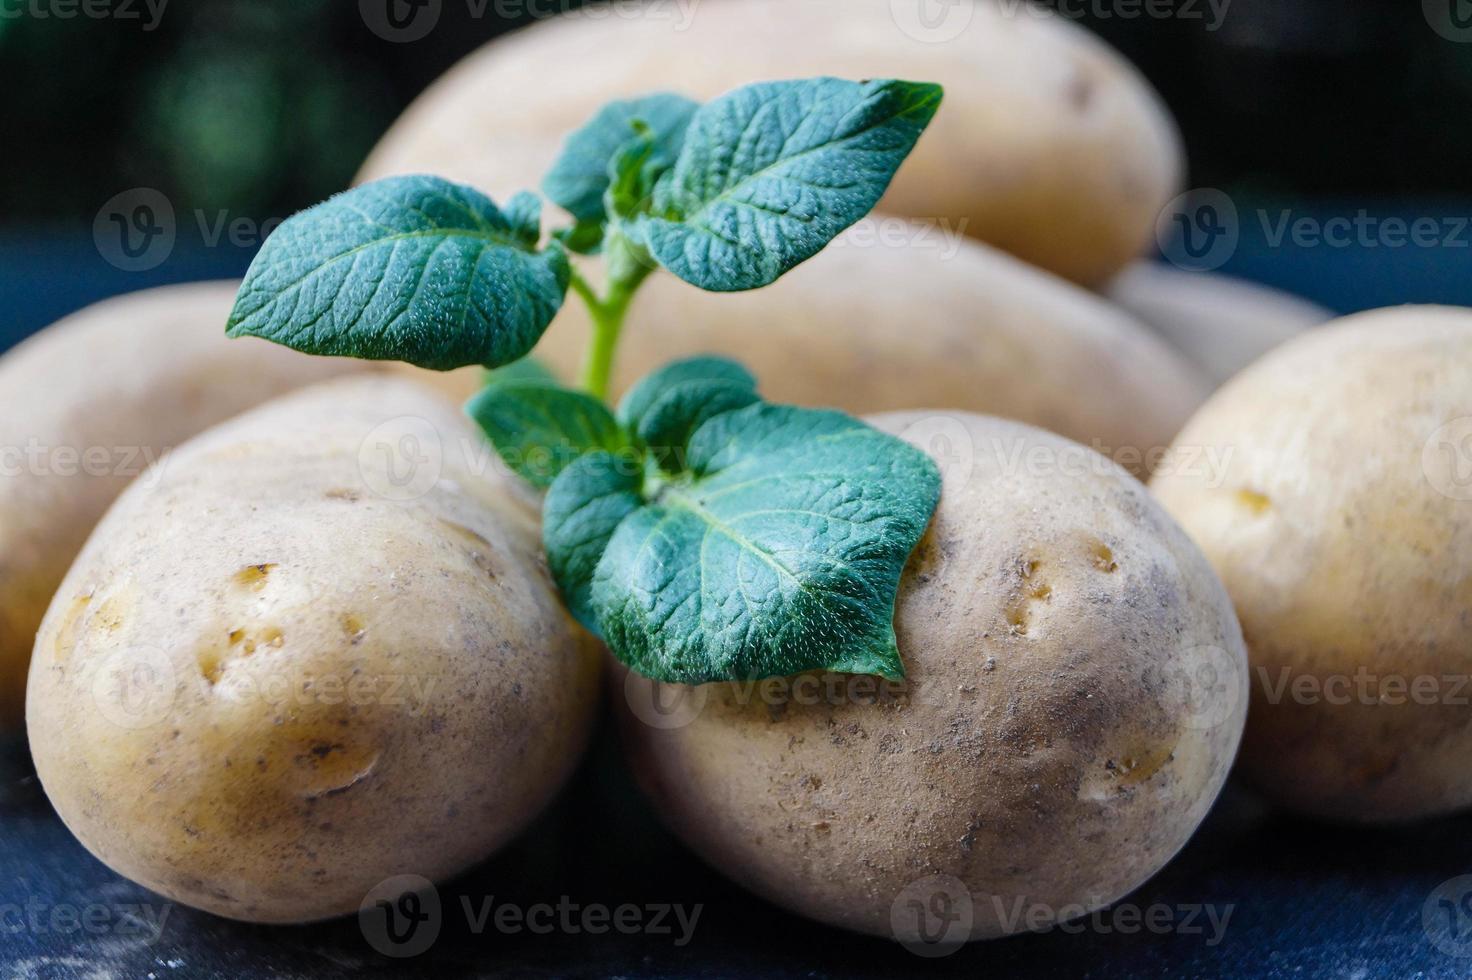 tysk potatis direkt efter skörd foto